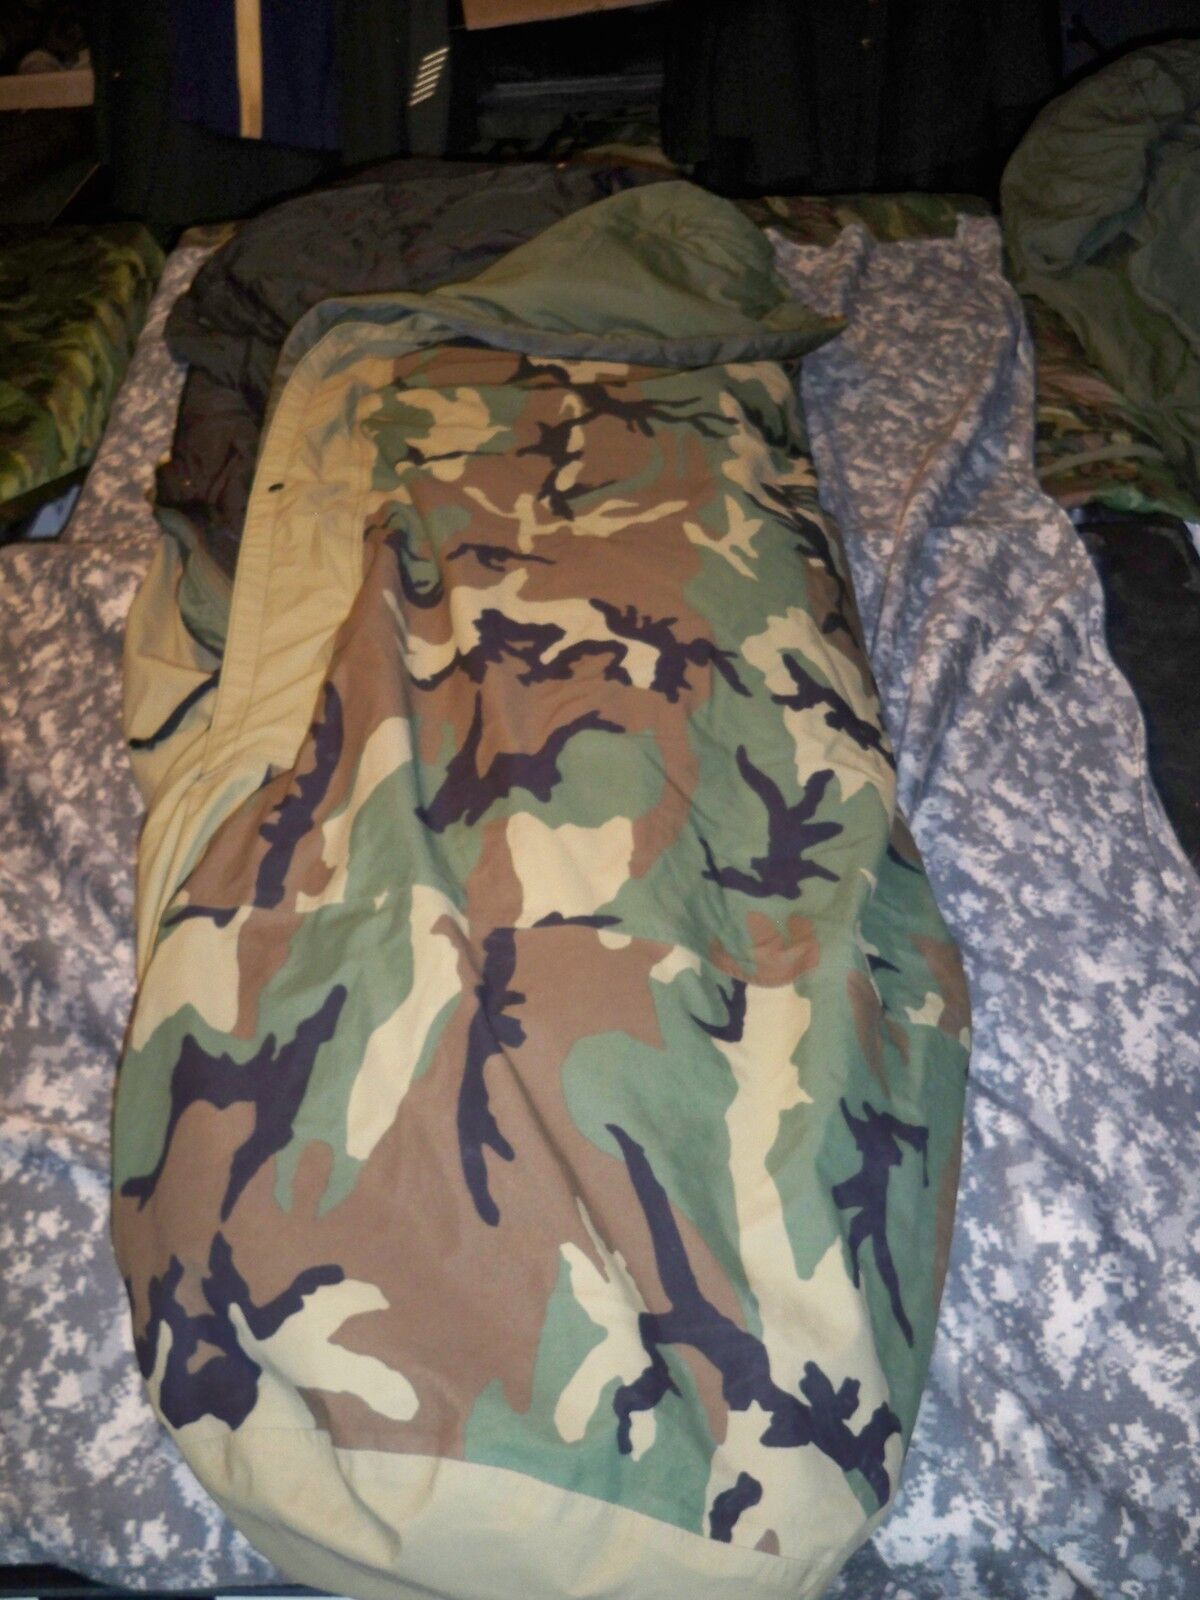 4 PIECE MODULAR SLEEP SYSTEM US ARMY SLEEPING BAG MSS GORETEX MILITARY FAIR COND